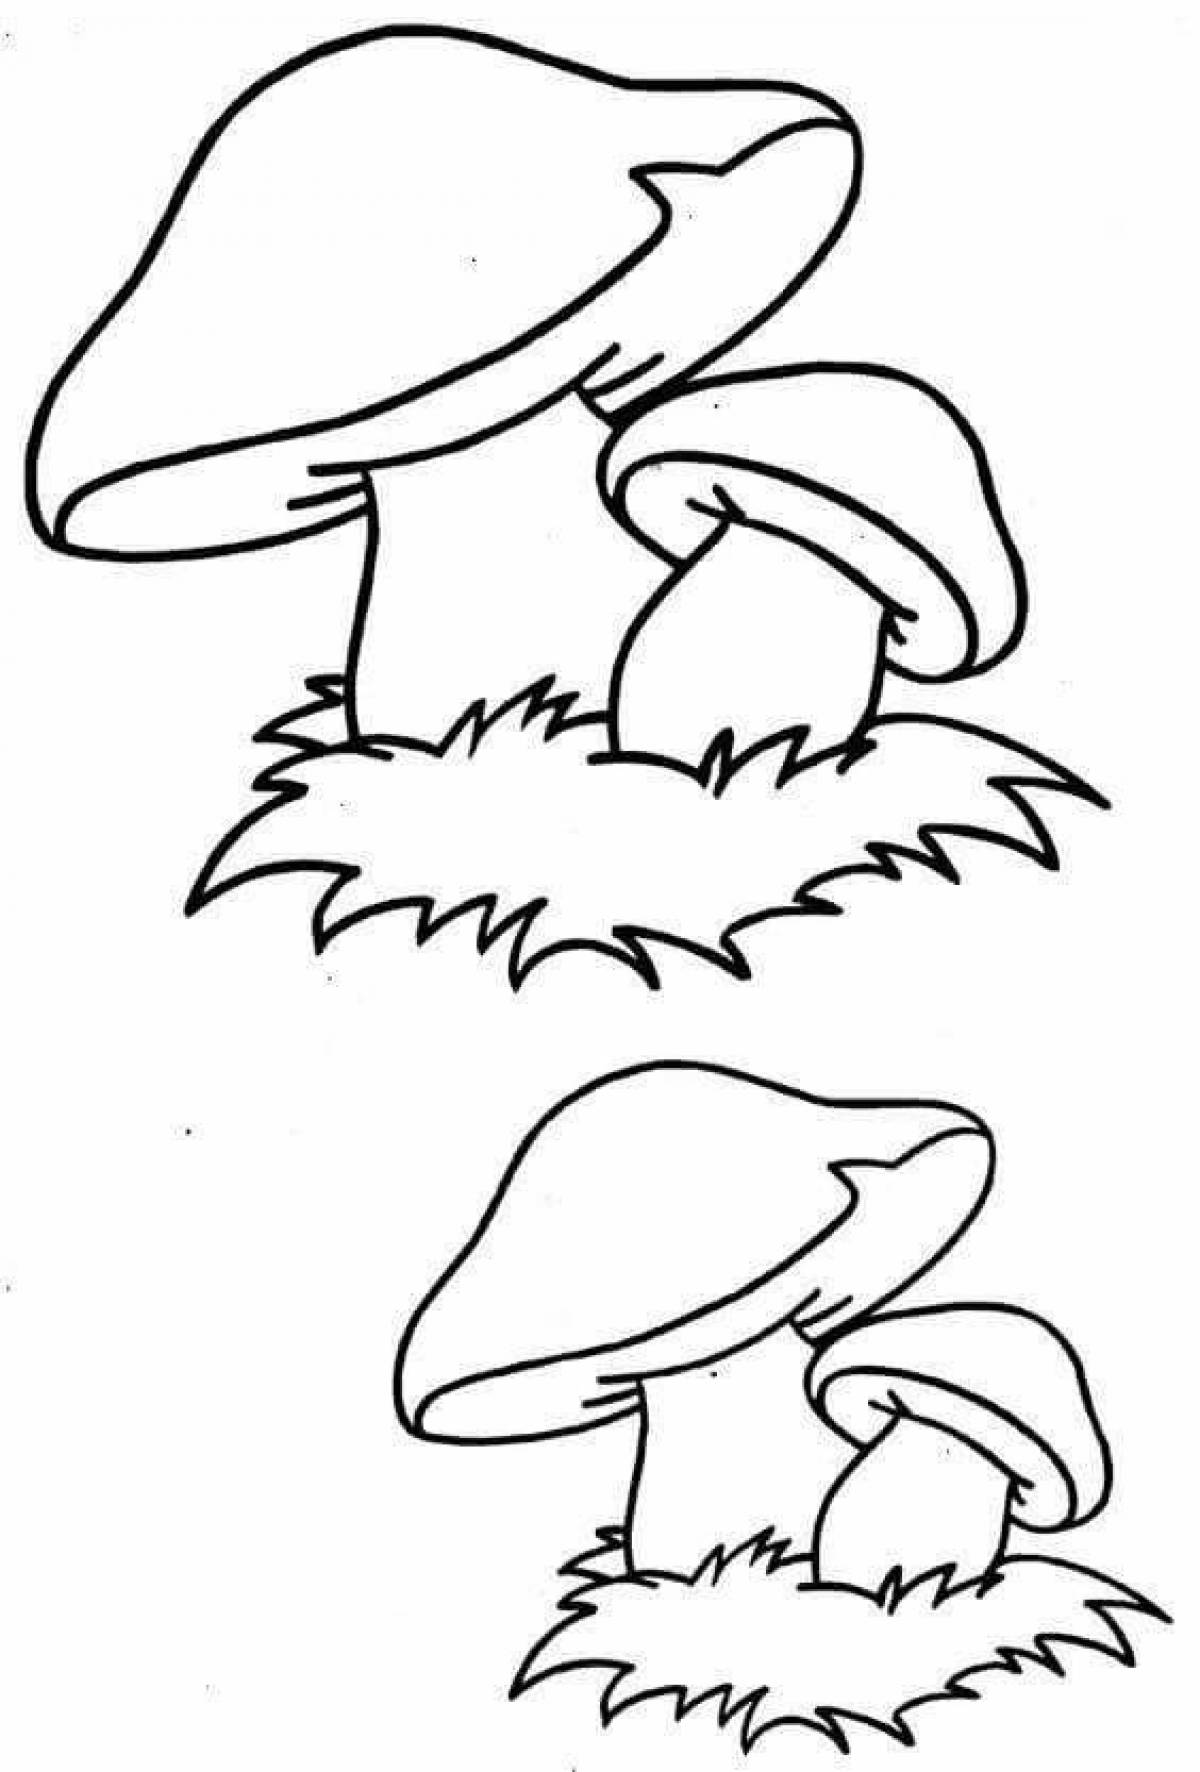 Bright mushroom coloring page